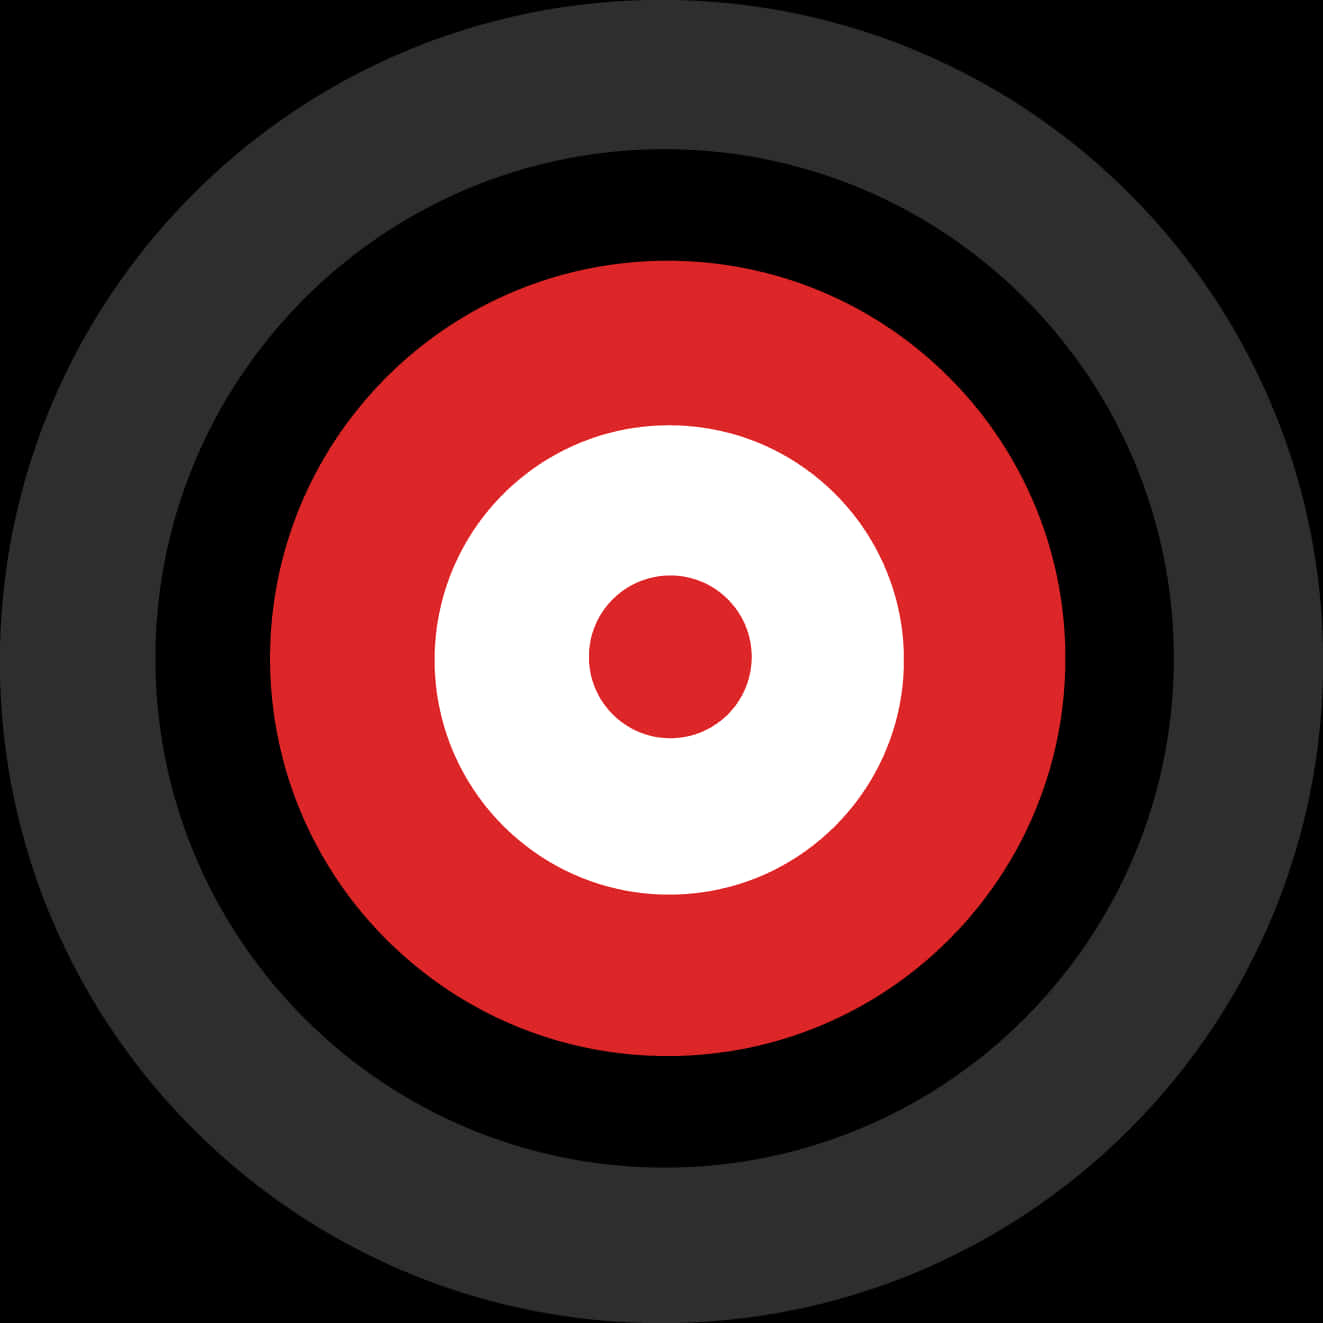 Iconic Redand White Bullseye Design PNG